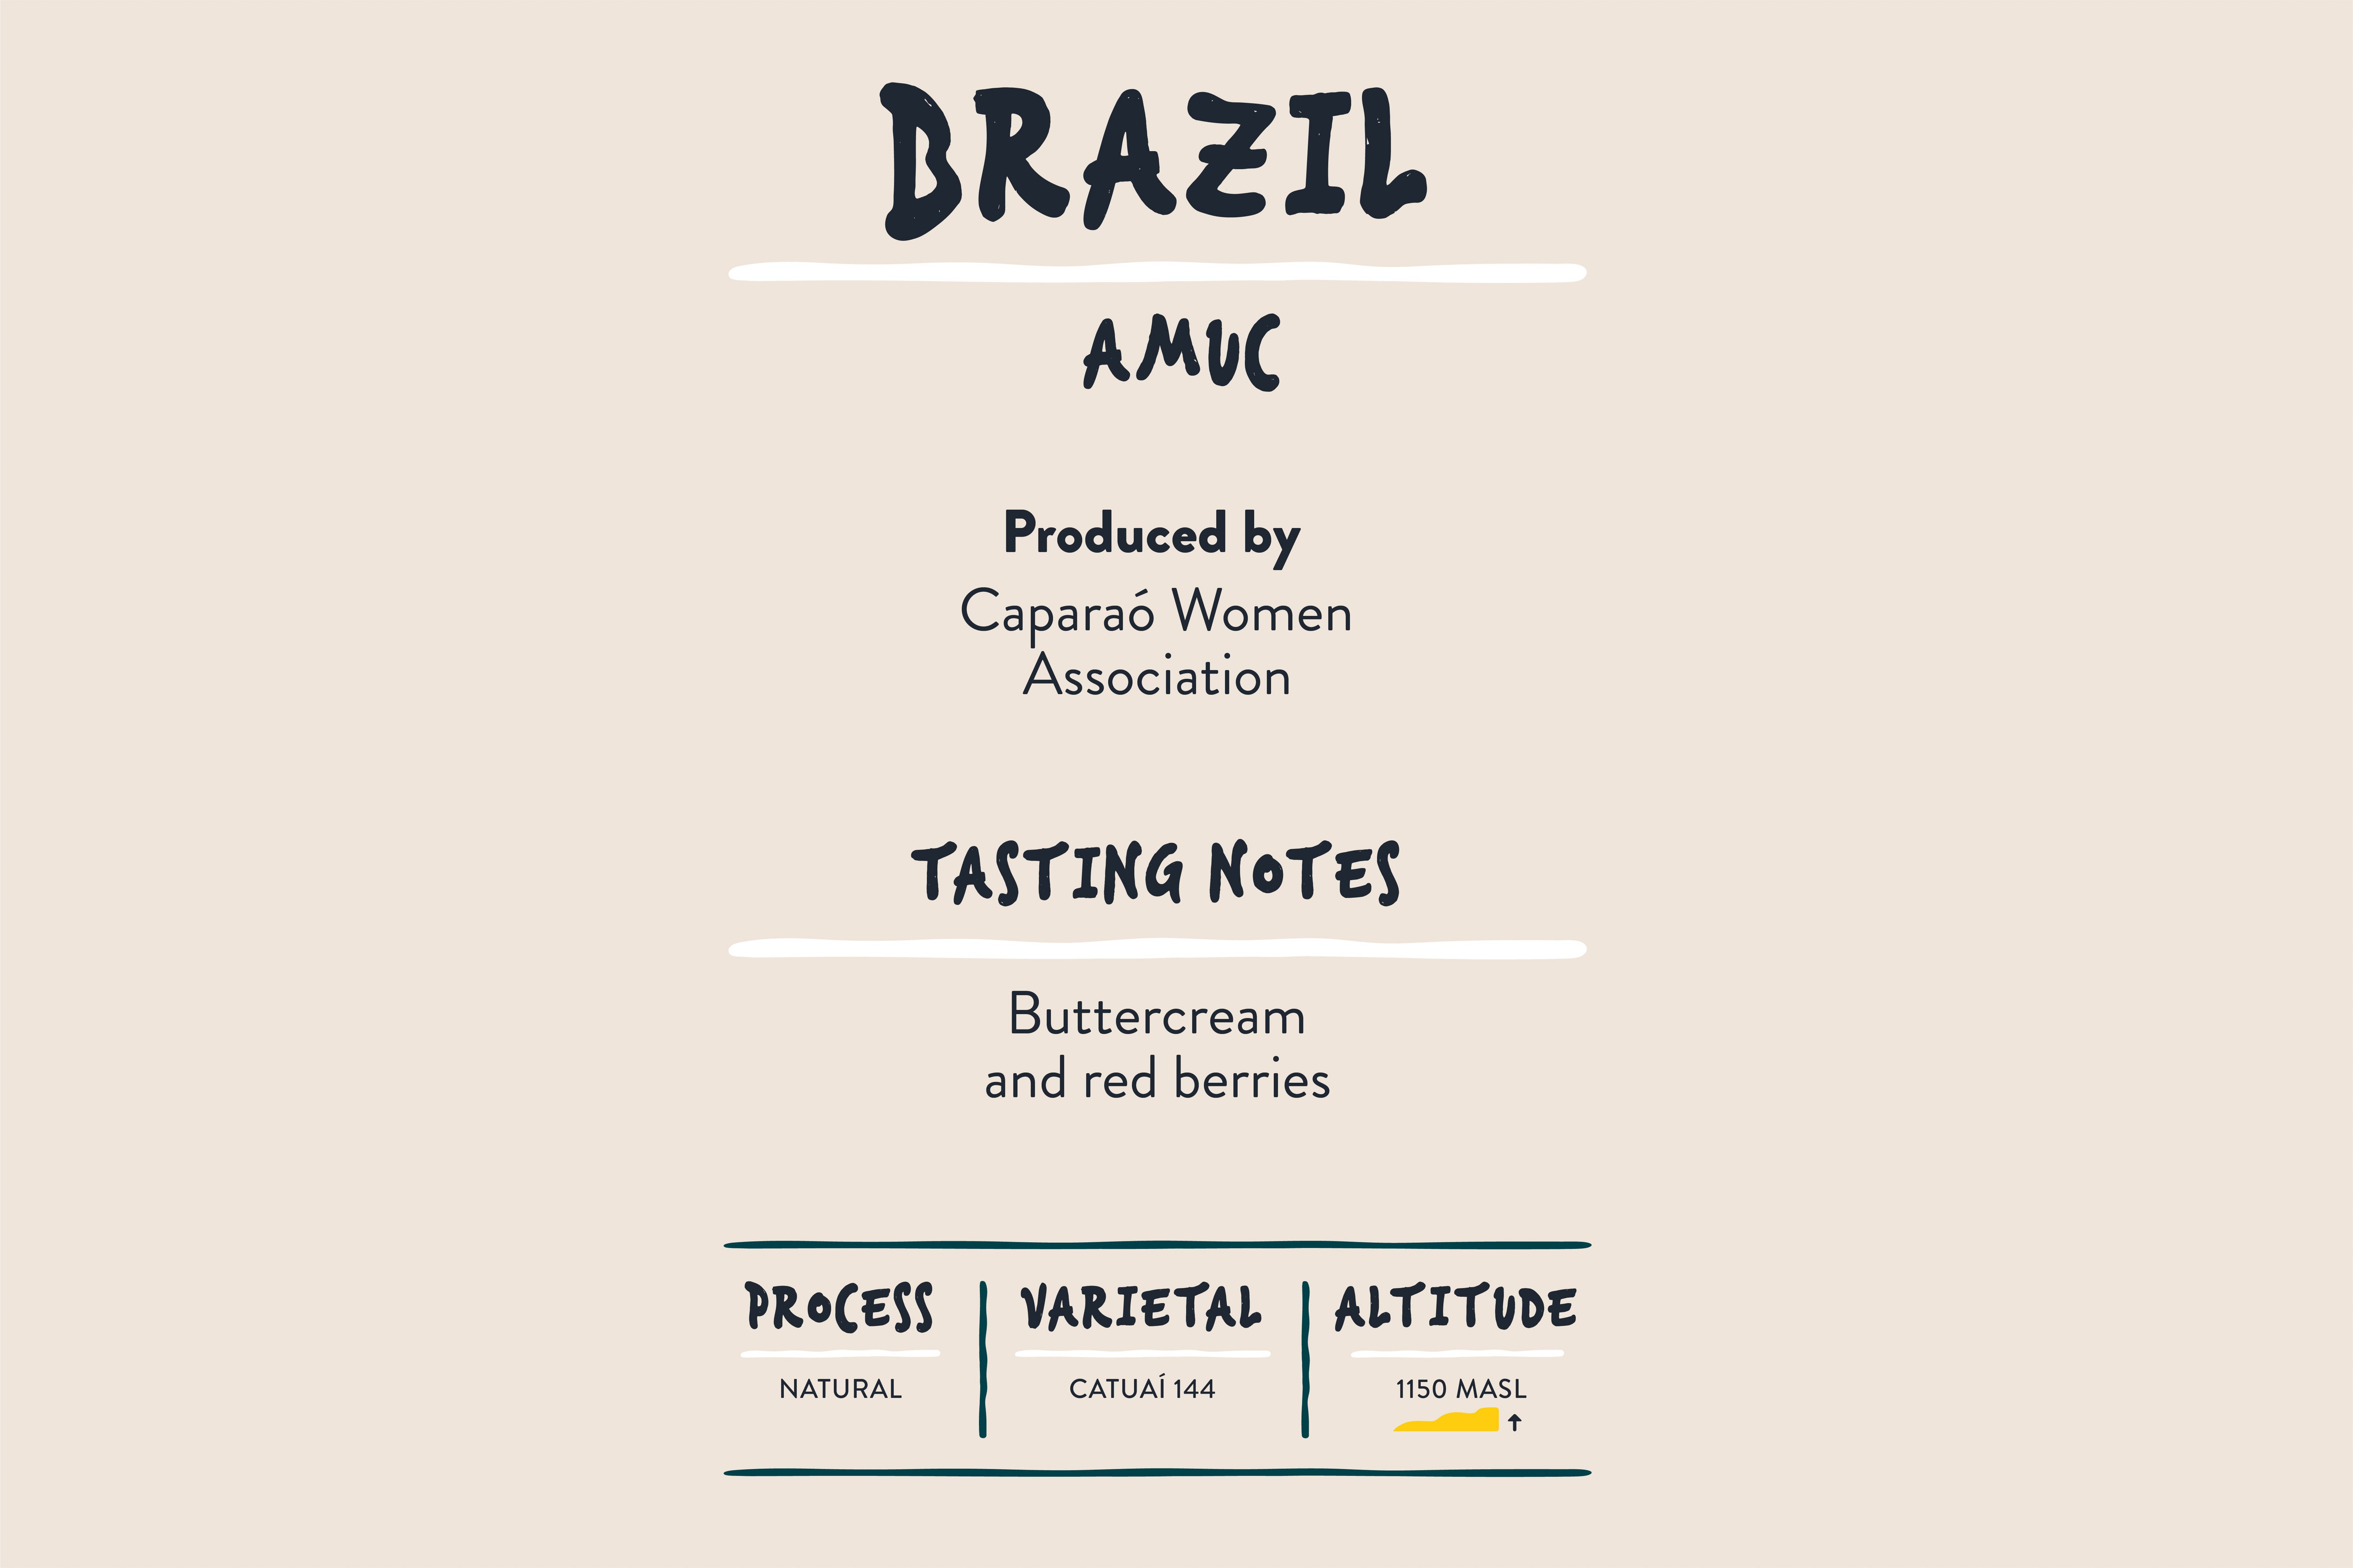 Brazilian Coffee - AMUC